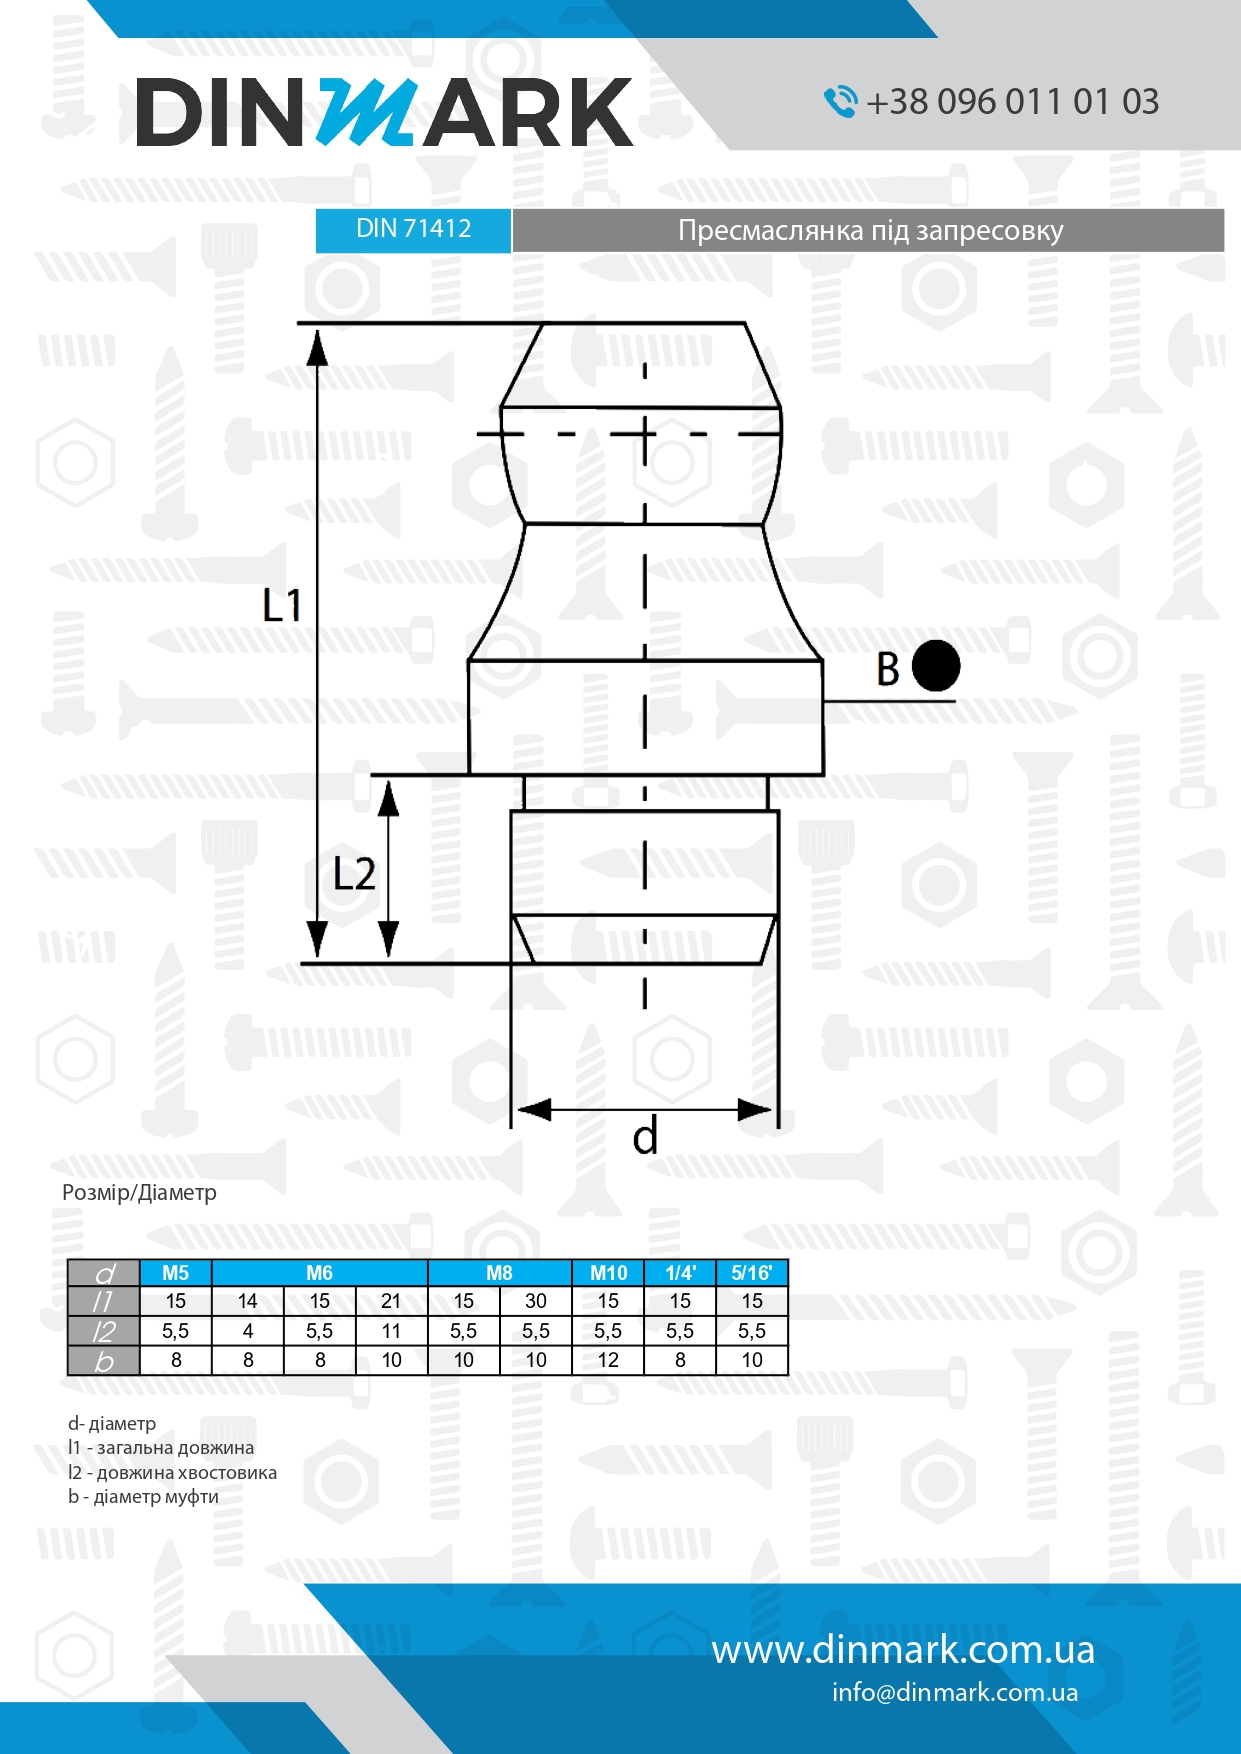 DIN 71412-A zinc Press oiler for pressing 180 degrees pdf